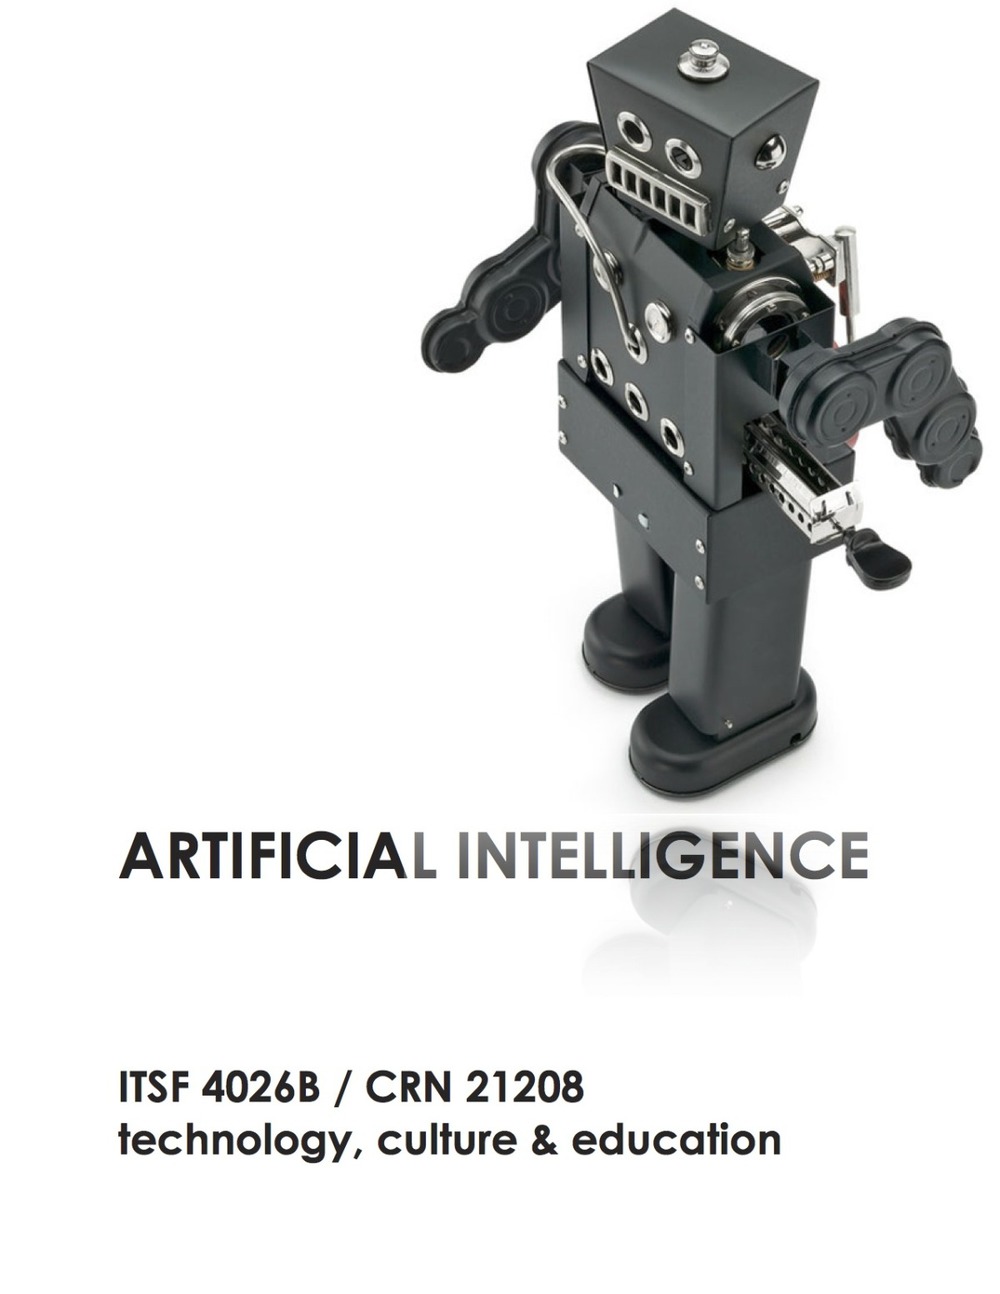 itsf 4026b flyers - artificial intelligence.jpg